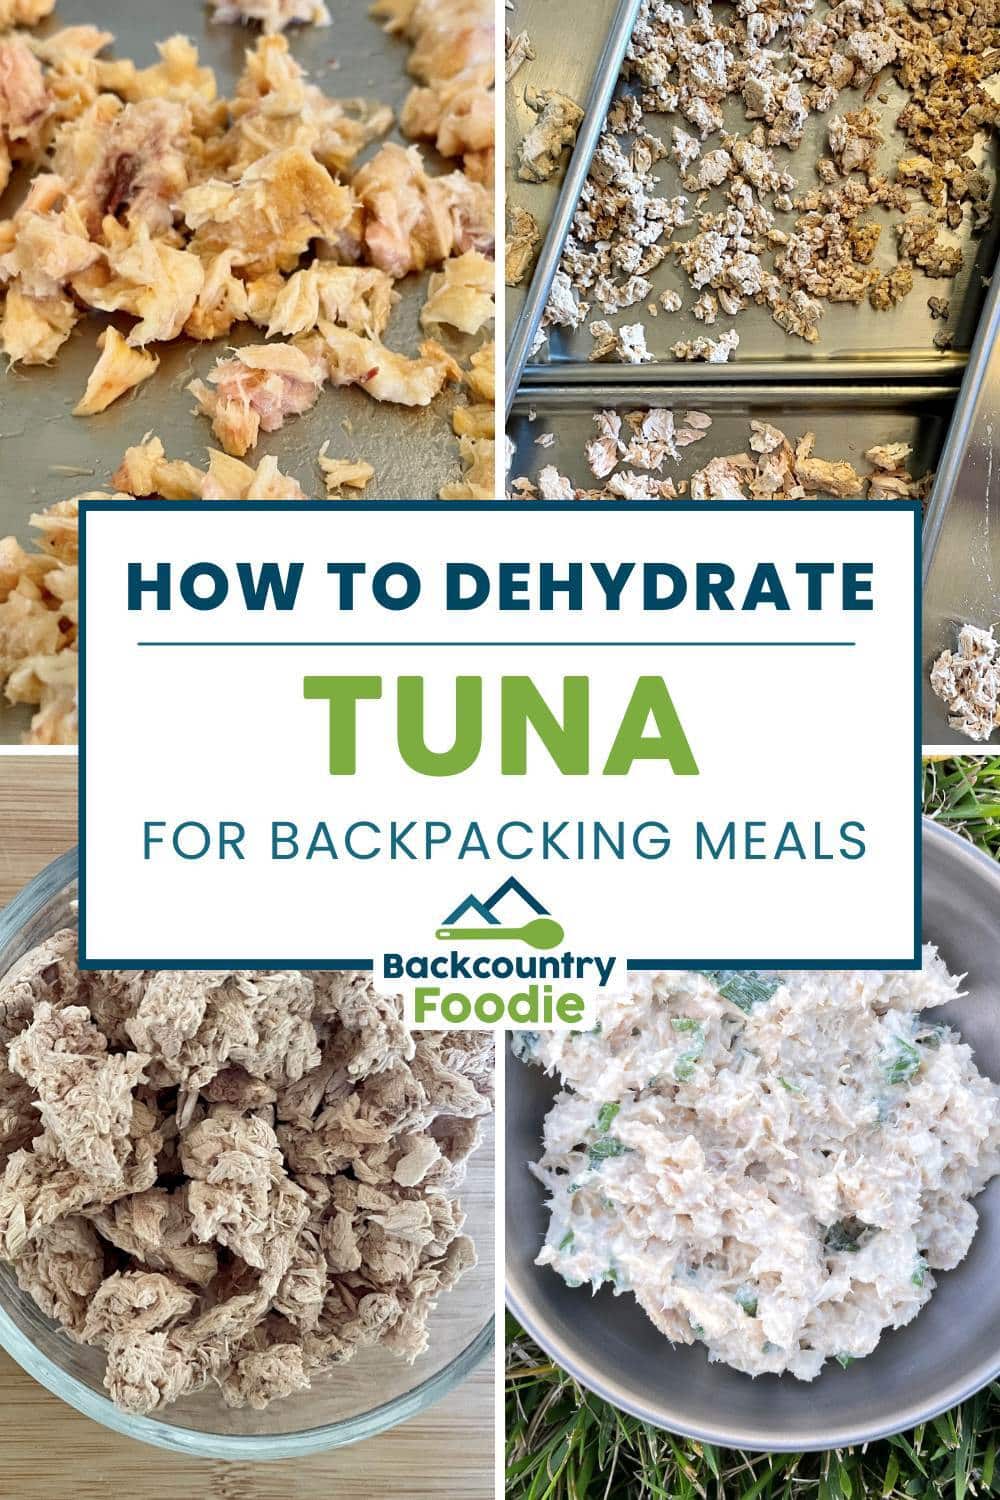 Tuna being prepared for dehydration